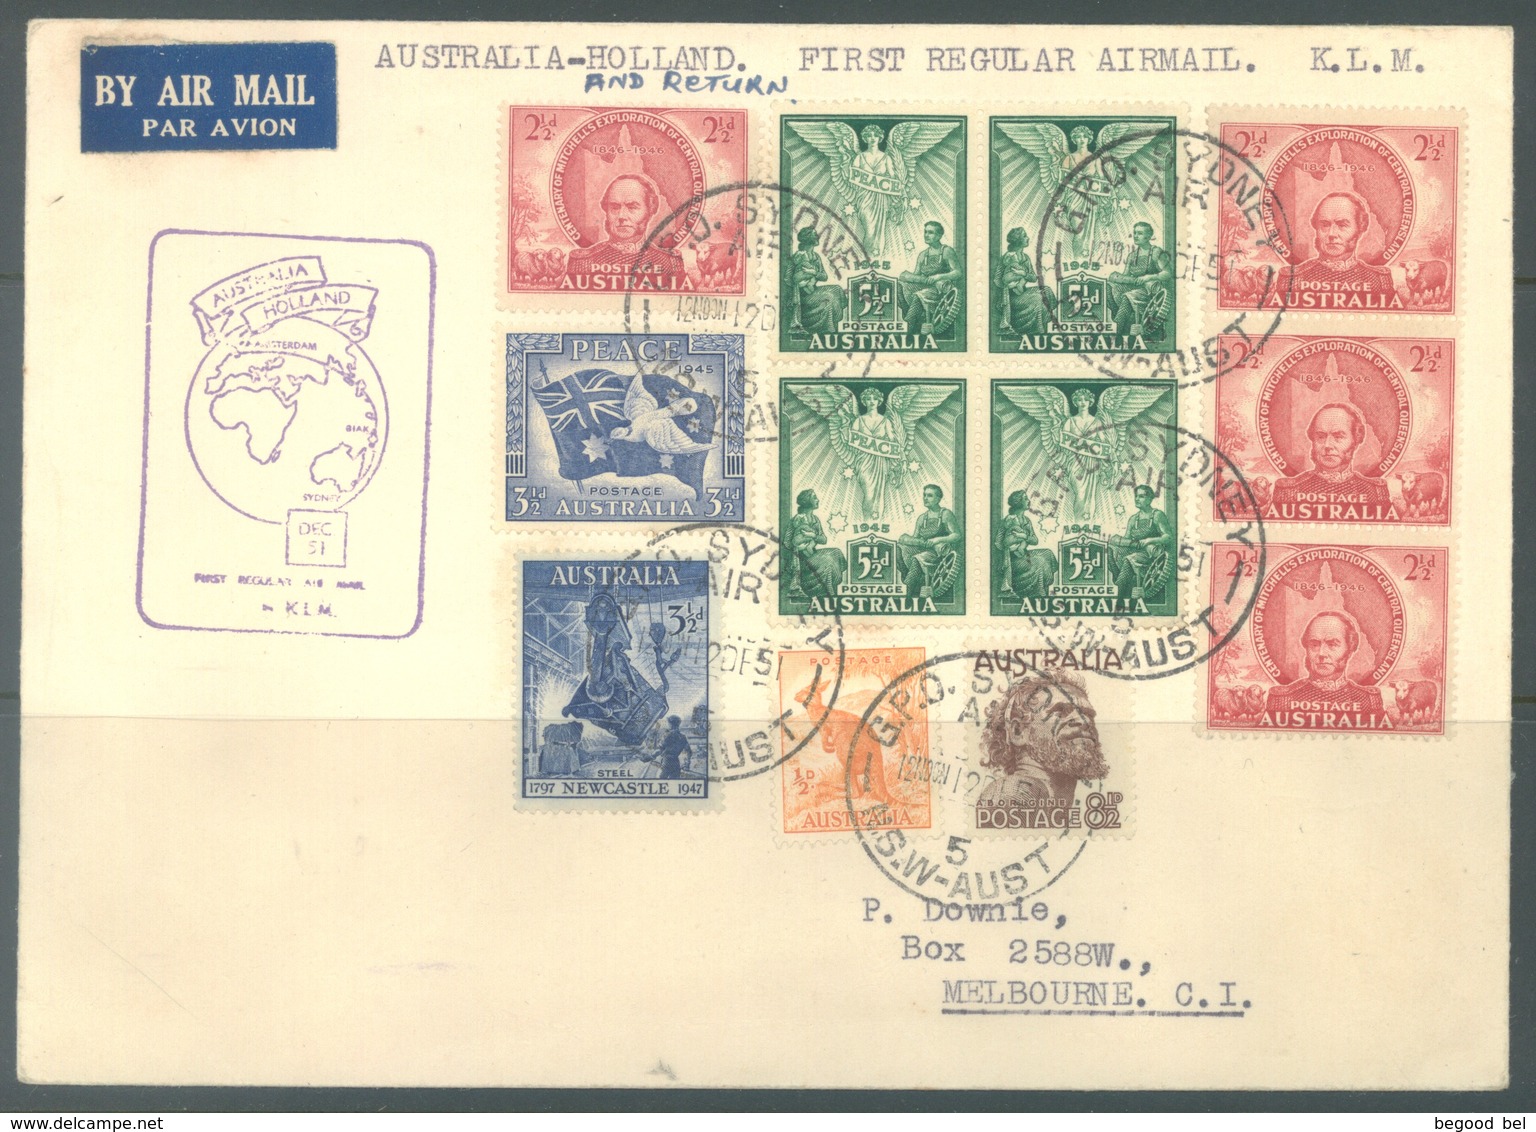 AUSTRALIA - DEC 1951 - FDC - FIRST DAY OF ISSUE AUSTRALIA HOLLAND AND RETURN KLM - Lot 17395 - Primi Voli